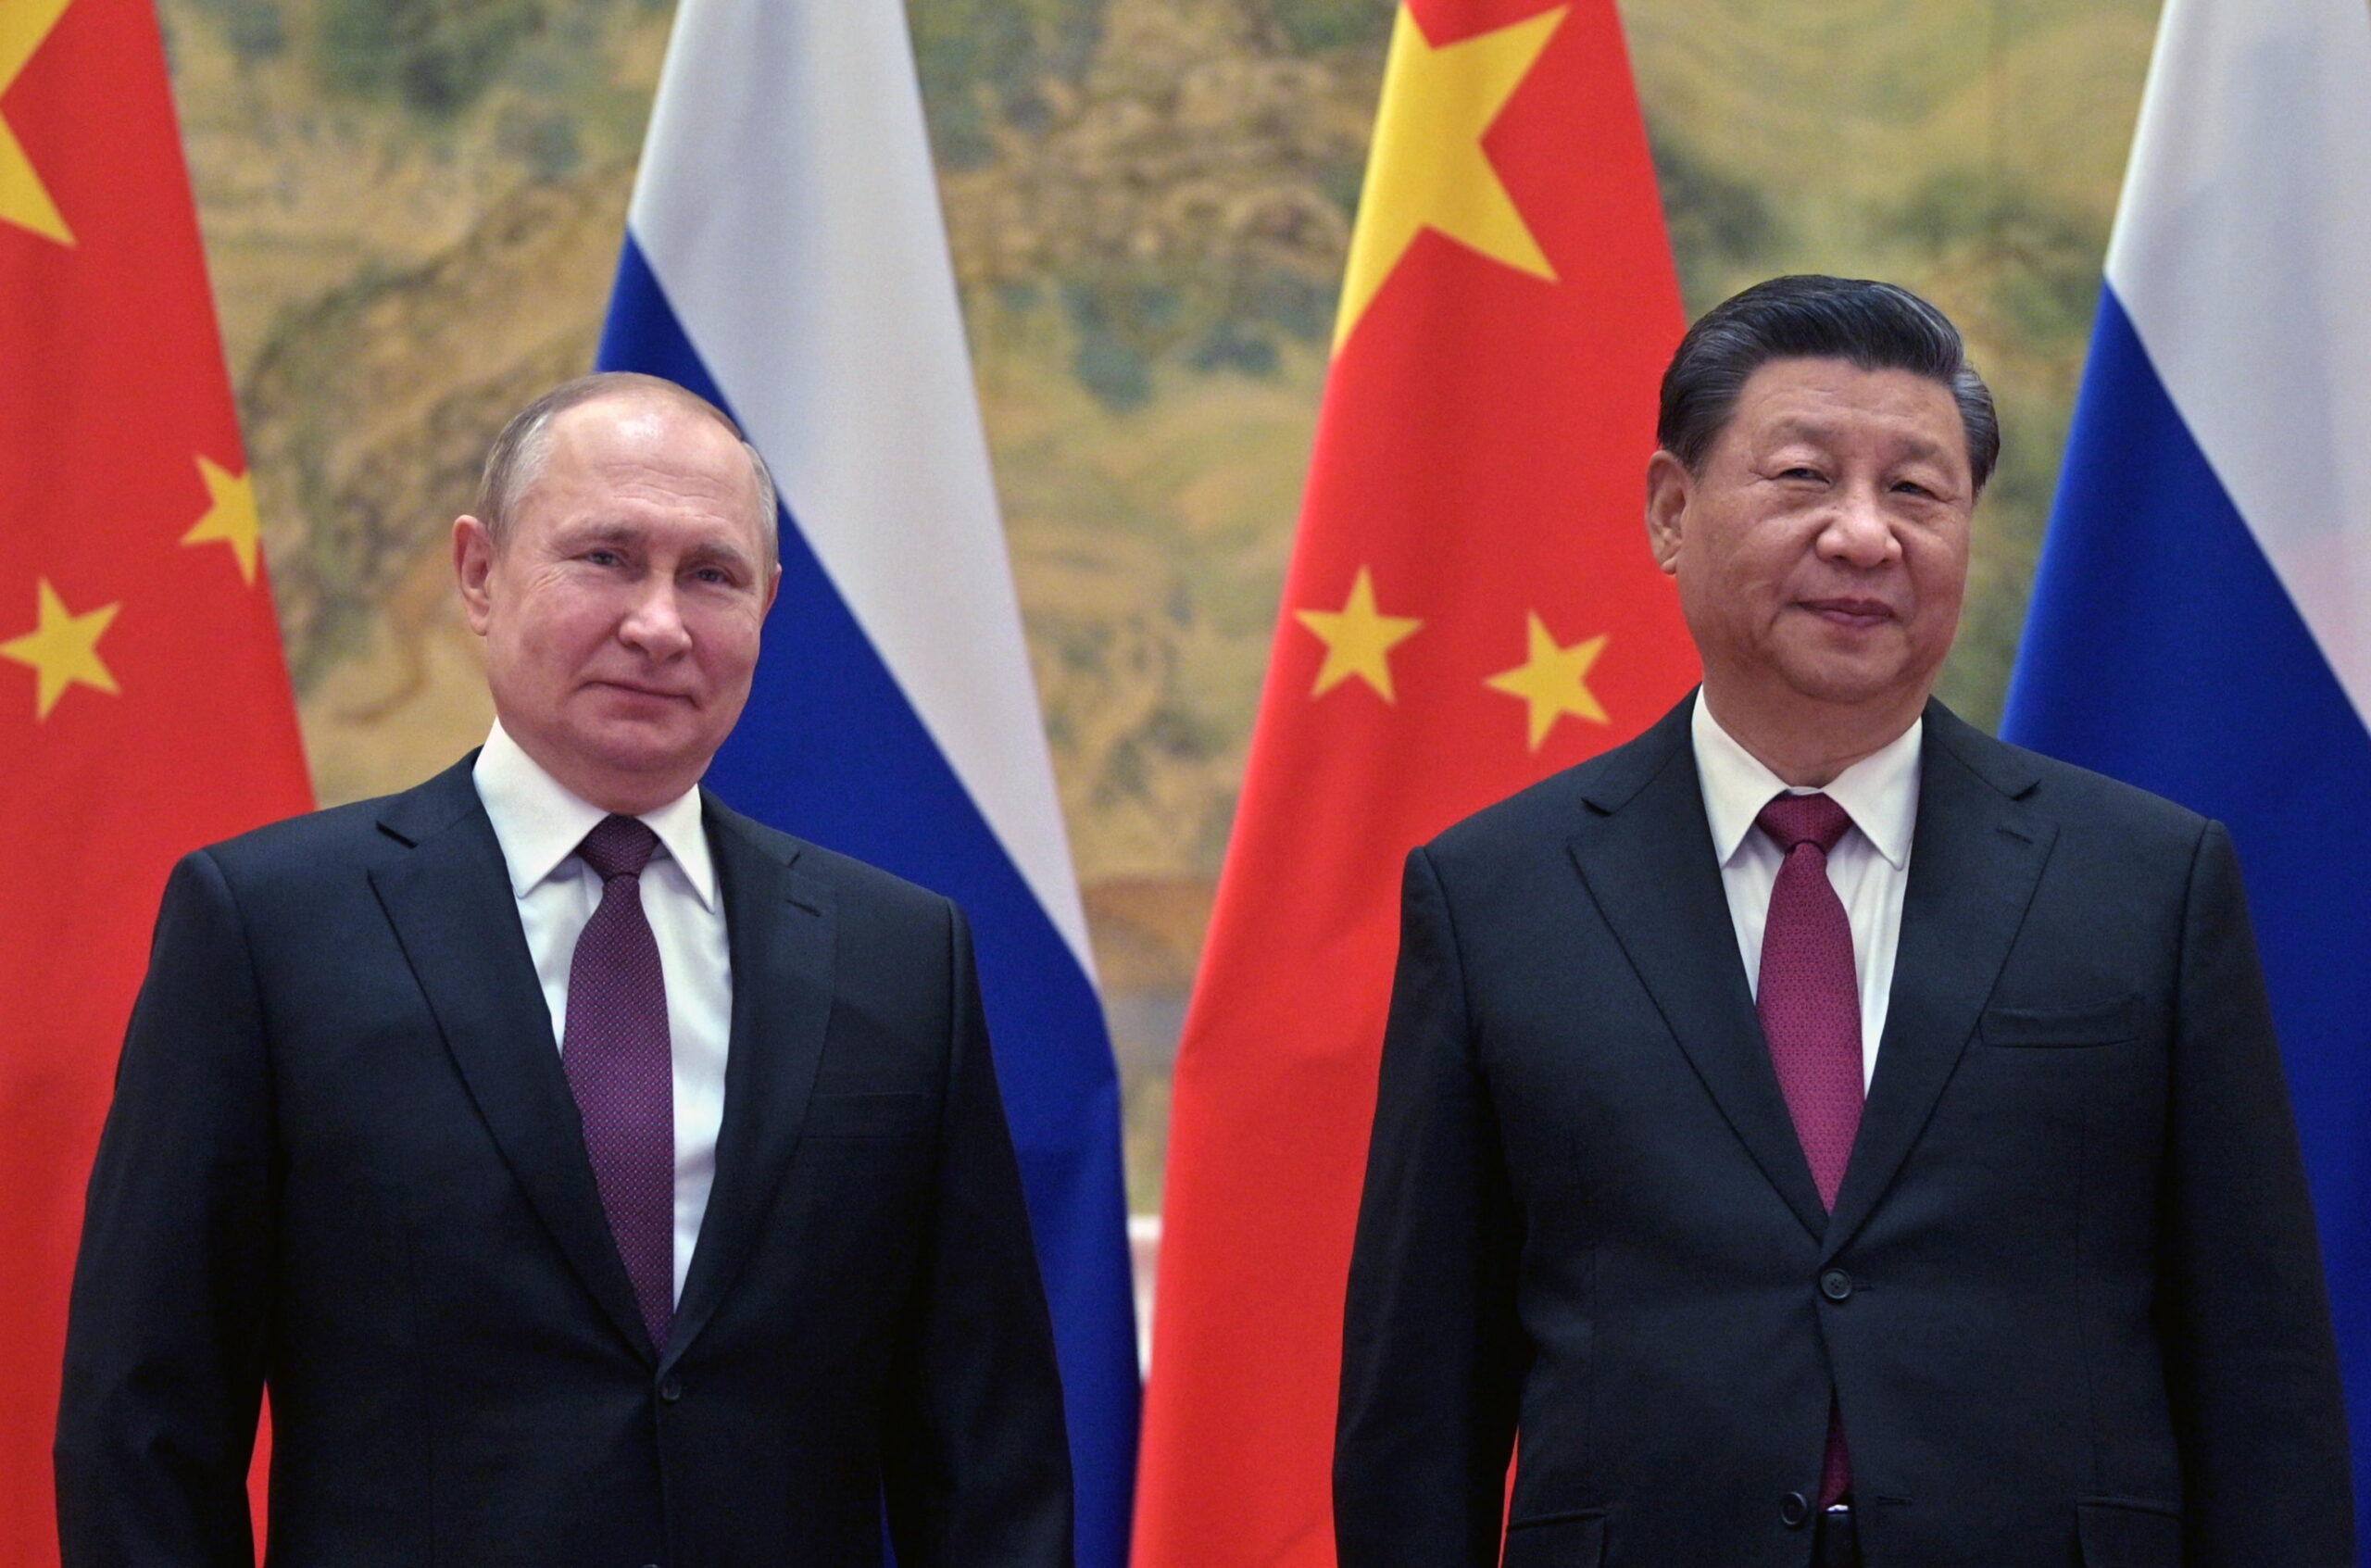 Russian President Vladimir Putin (L) and Chinese President Xi Jinping (R) pose for a picture during their meeting in Beijing, China, 04 February 2022. ANSA/ALEXEI DRUZHININ / KREMLIN / SPUTNIK / POOL MANDATORY CREDIT